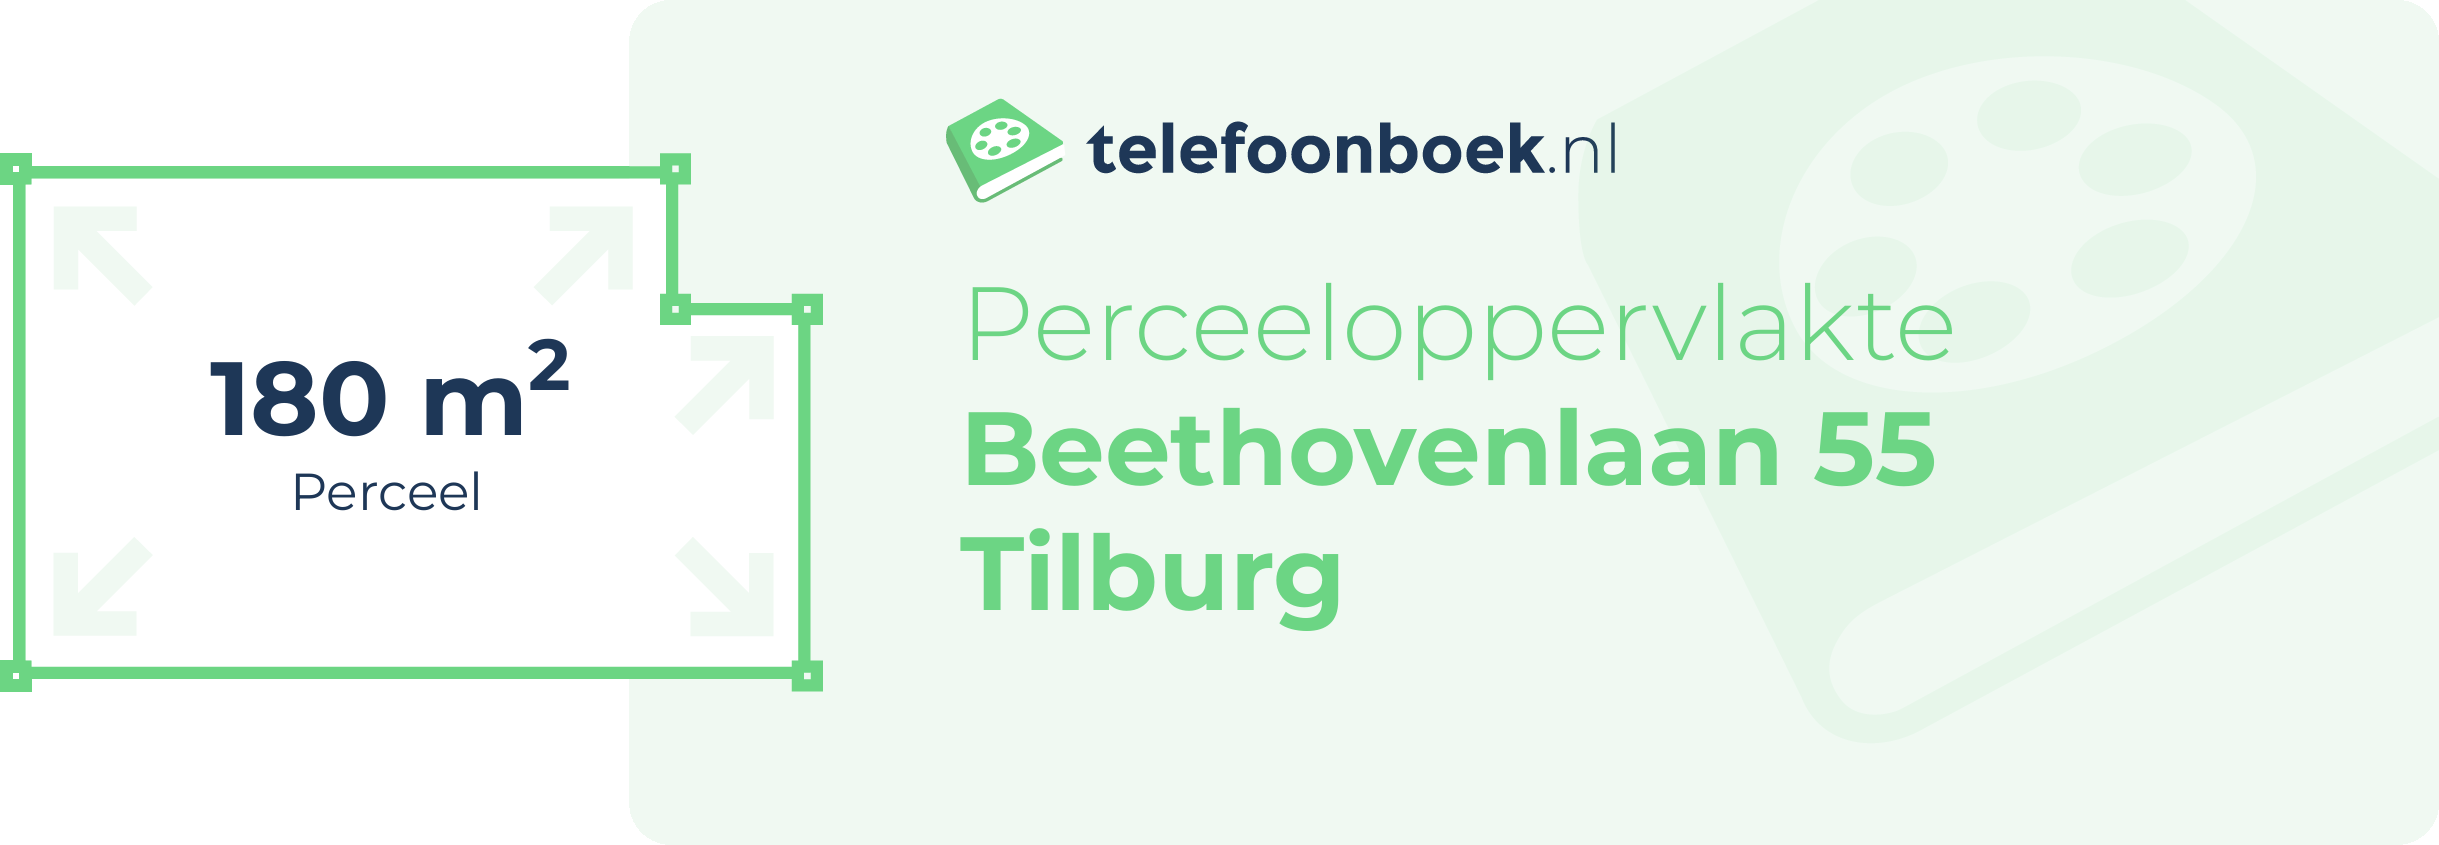 Perceeloppervlakte Beethovenlaan 55 Tilburg